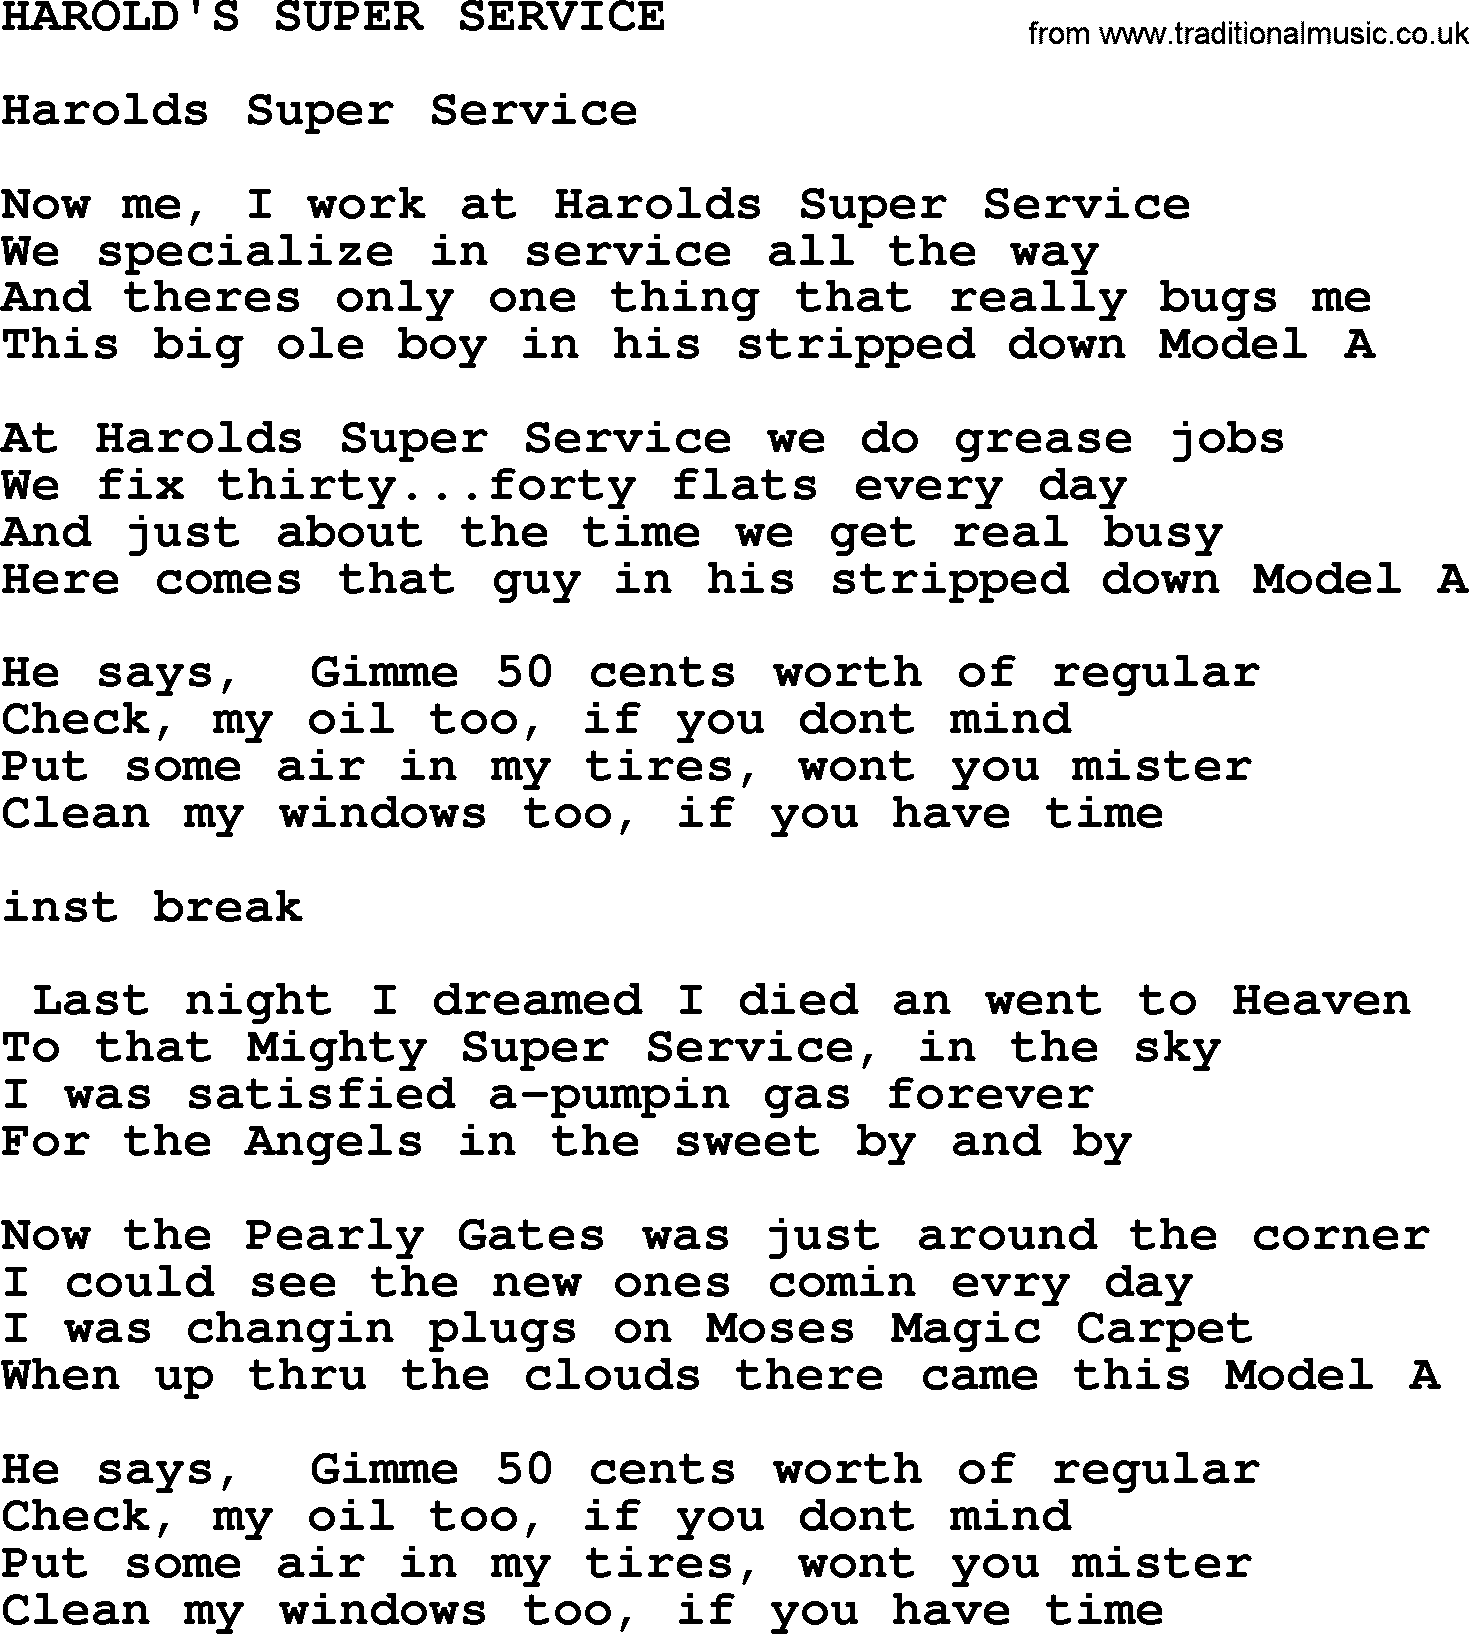 Merle Haggard song: Harold's Super Service, lyrics.